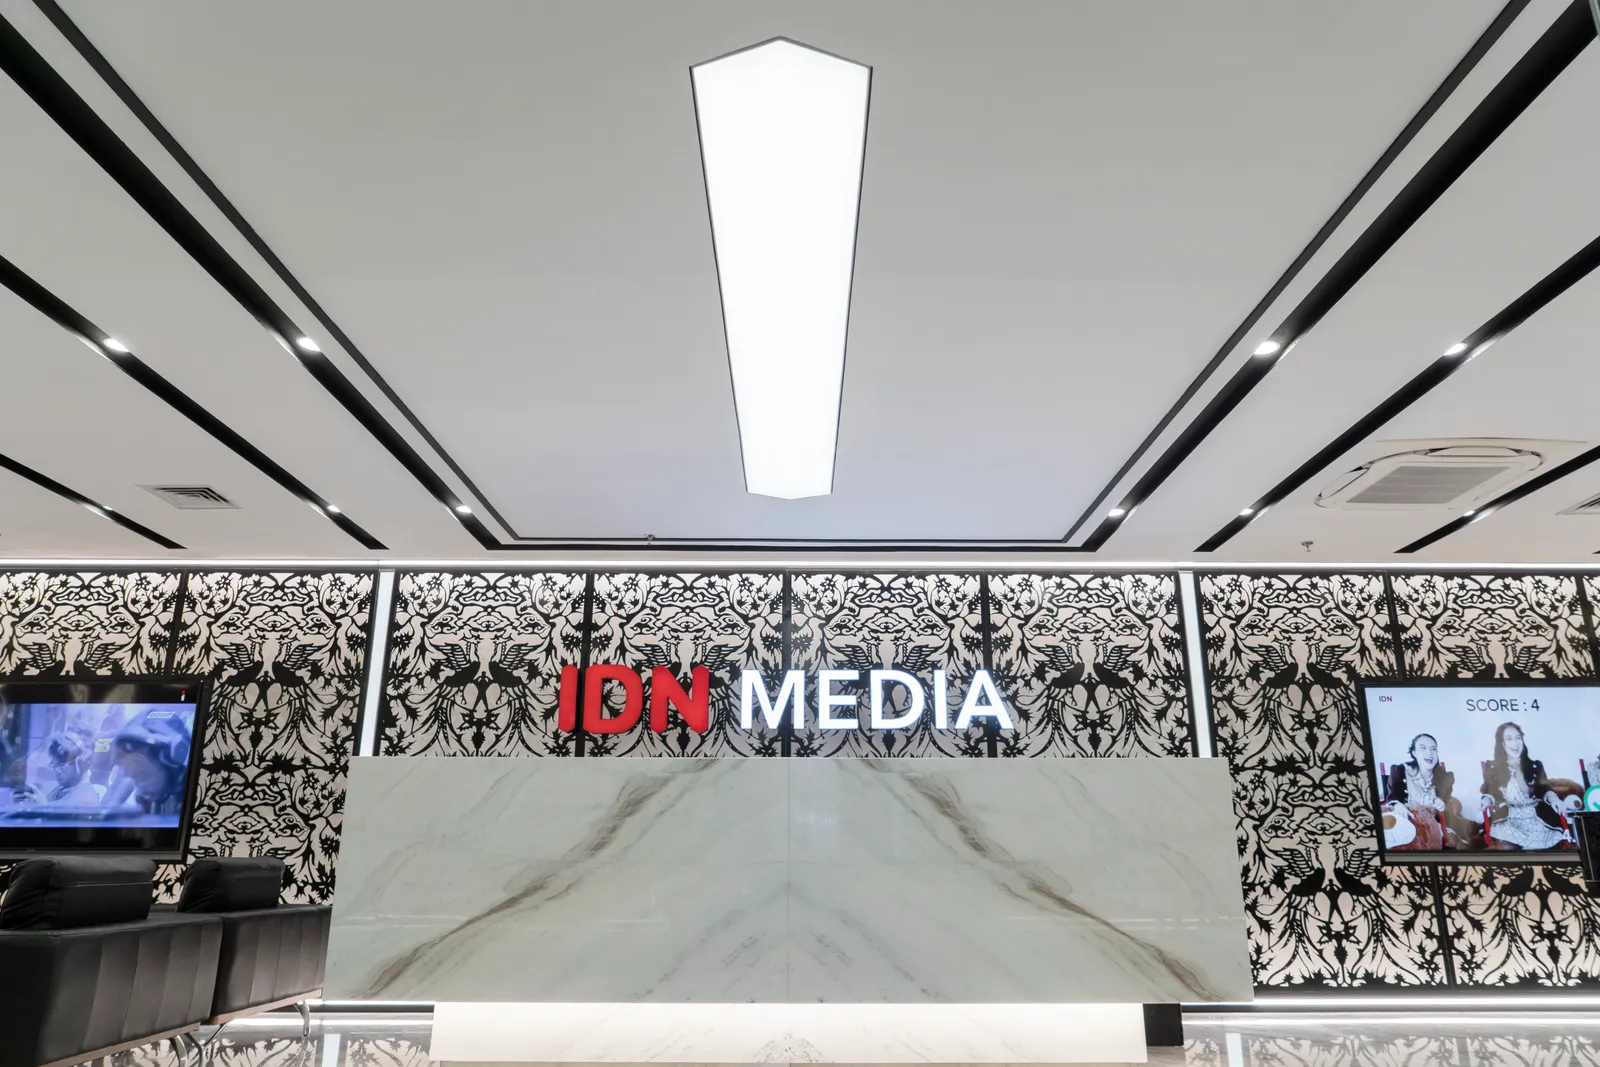 8 Tahun IDN Media, #KitaIDN untuk
Masa Depan Indonesia Lebih Baik